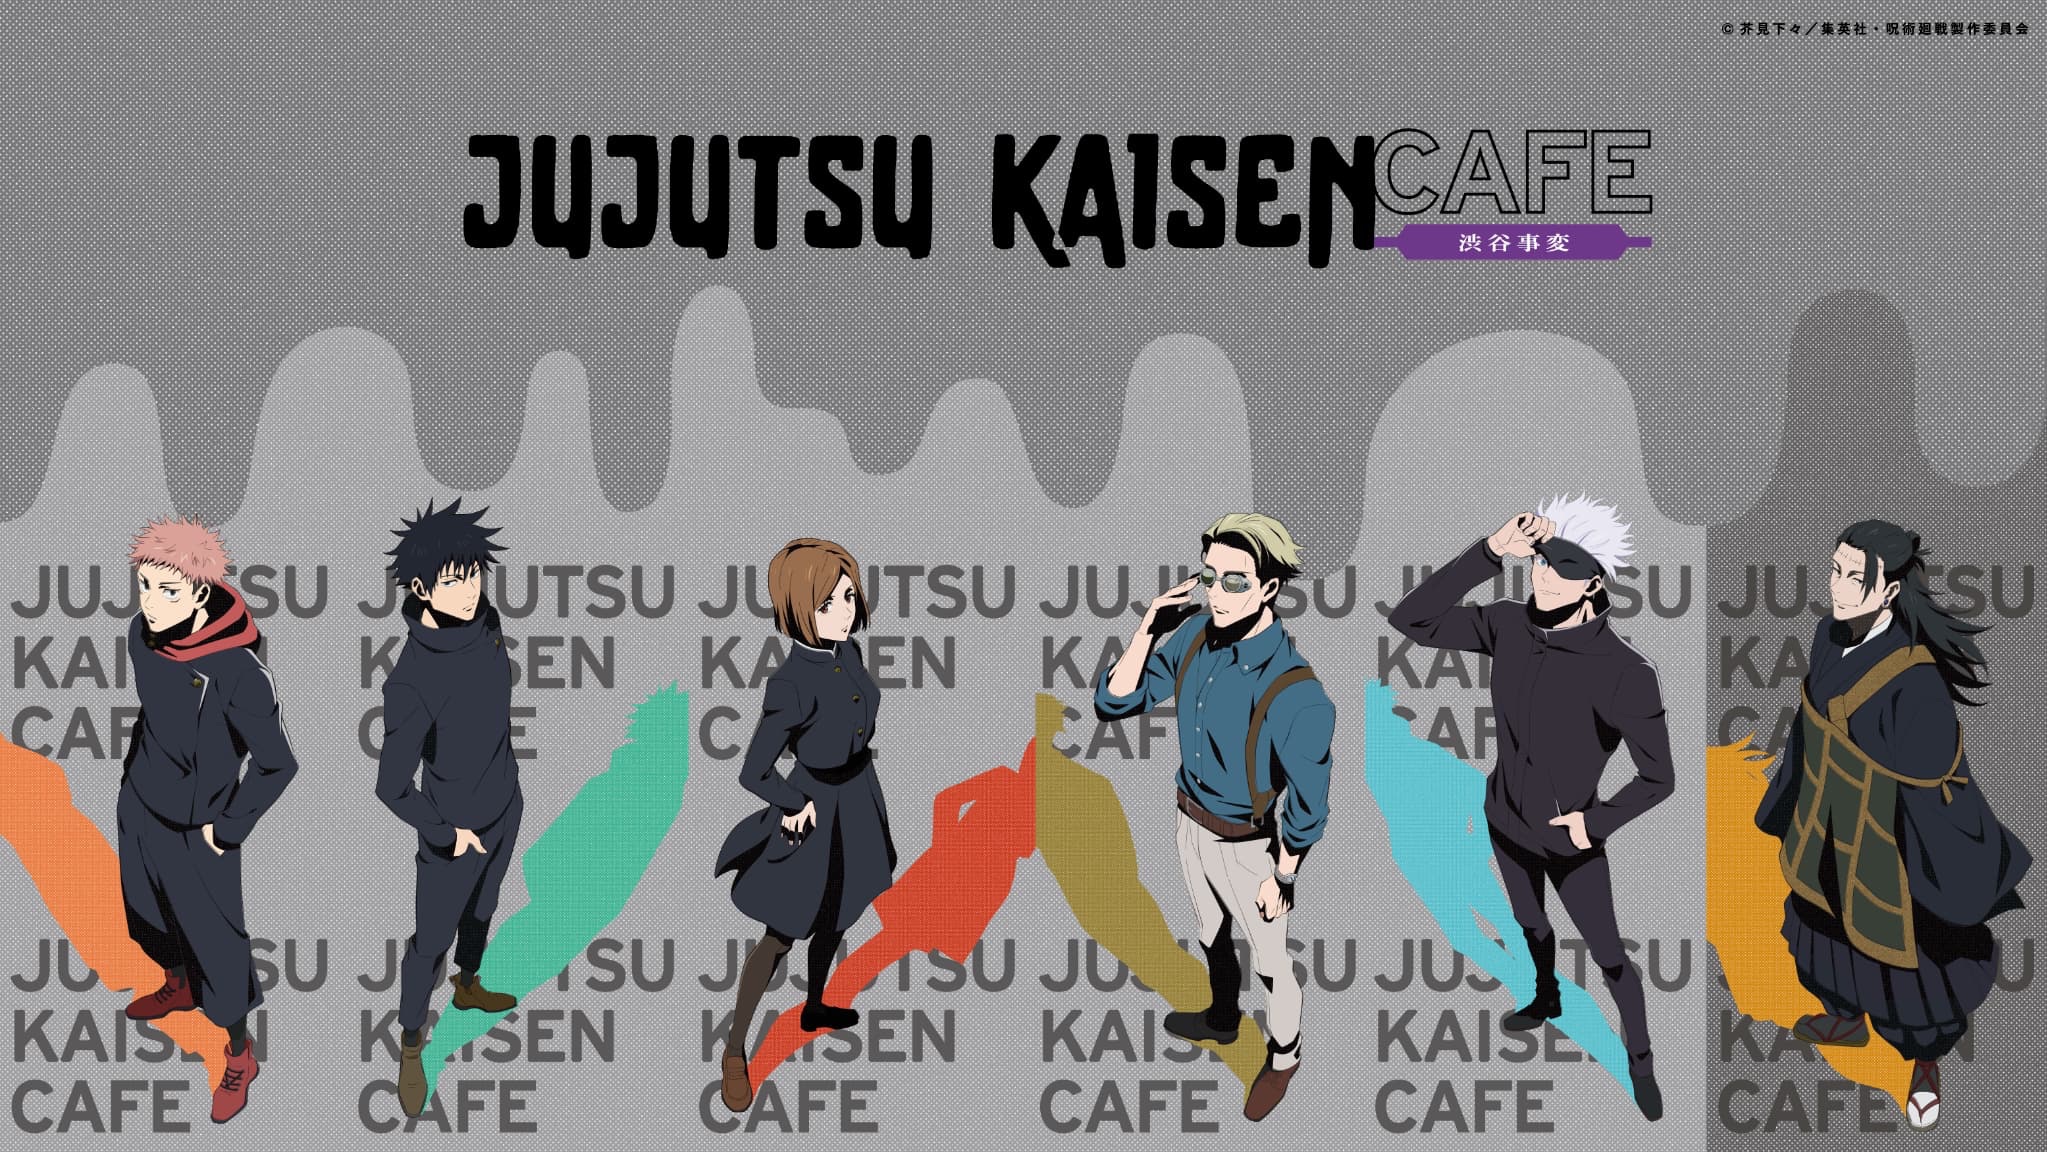 Jujutsu Kaisen Cafe